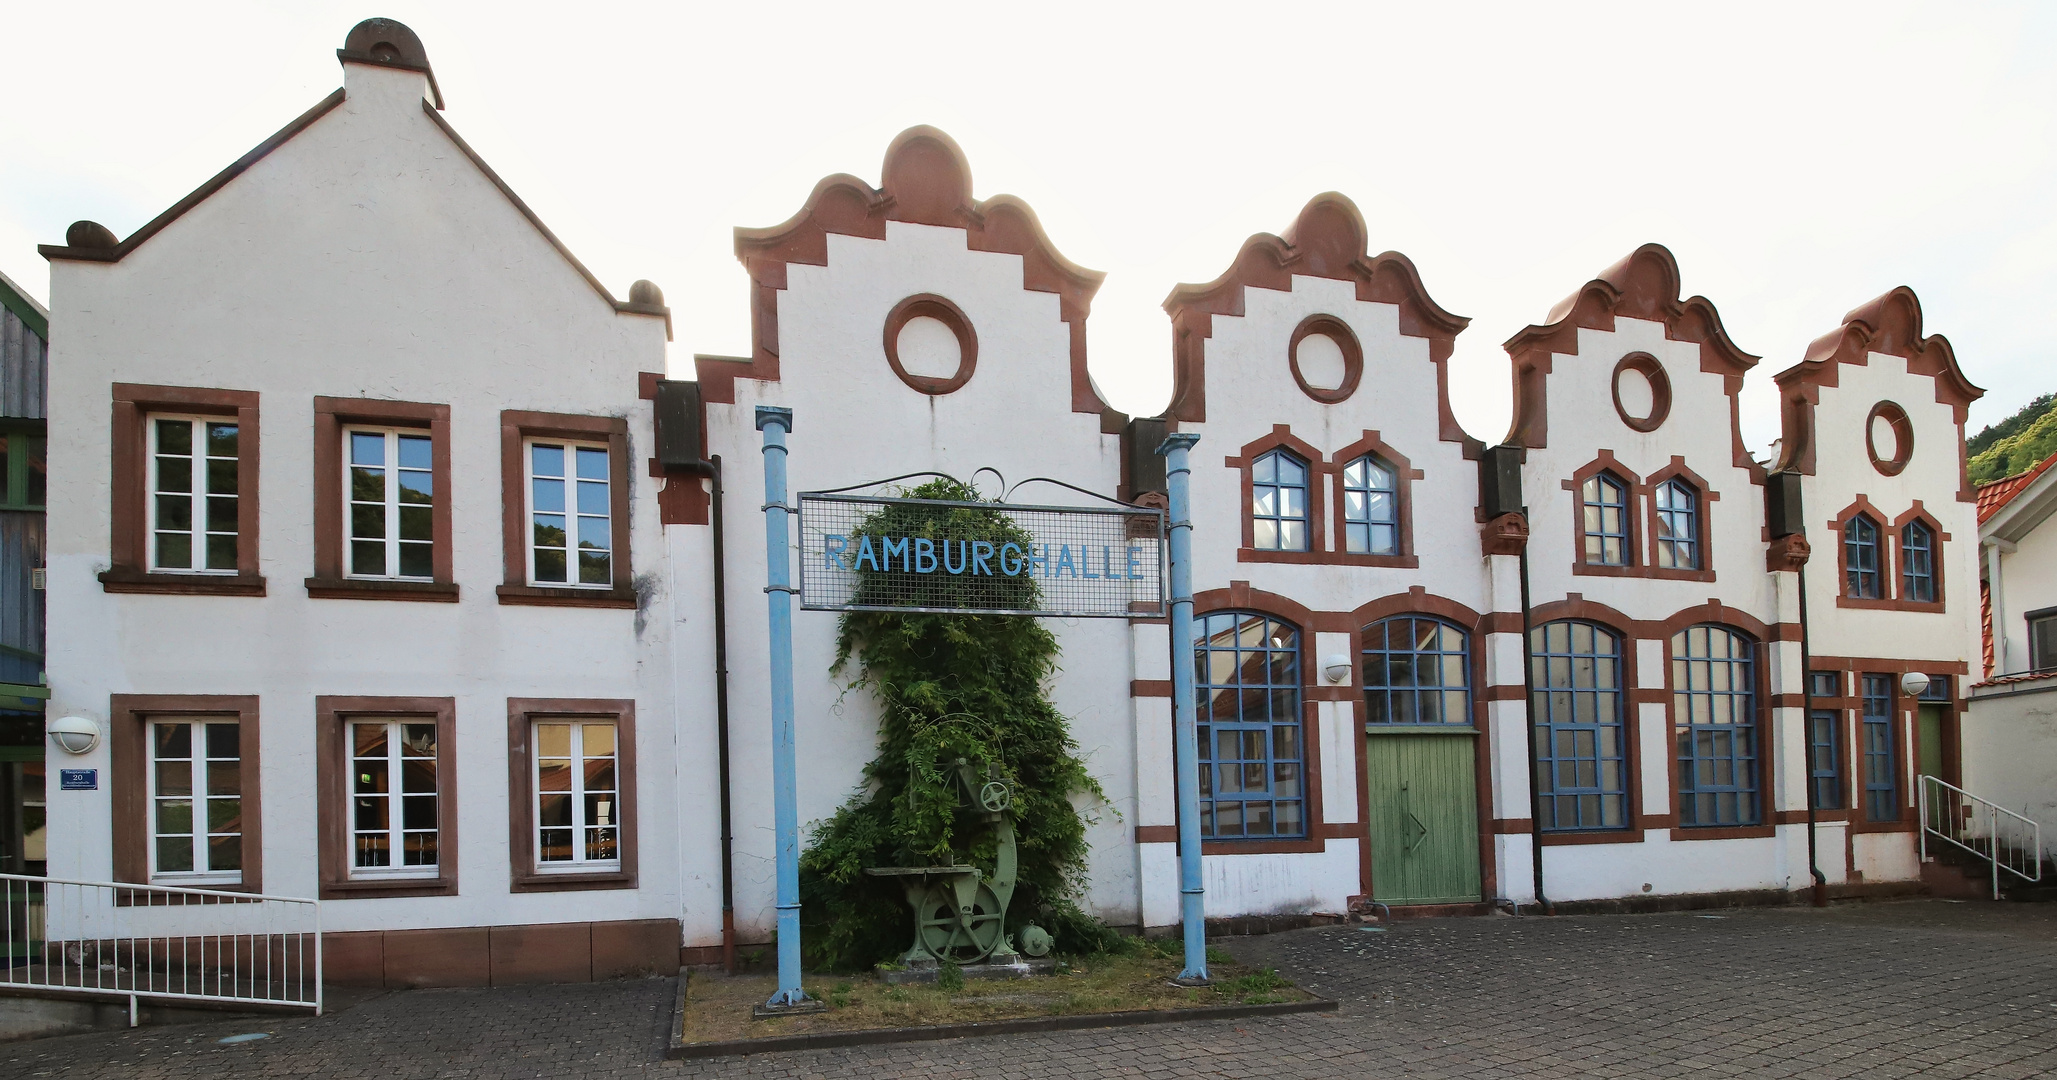 Ramburghalle in Ramberg (2020_06_27_0691_ji)